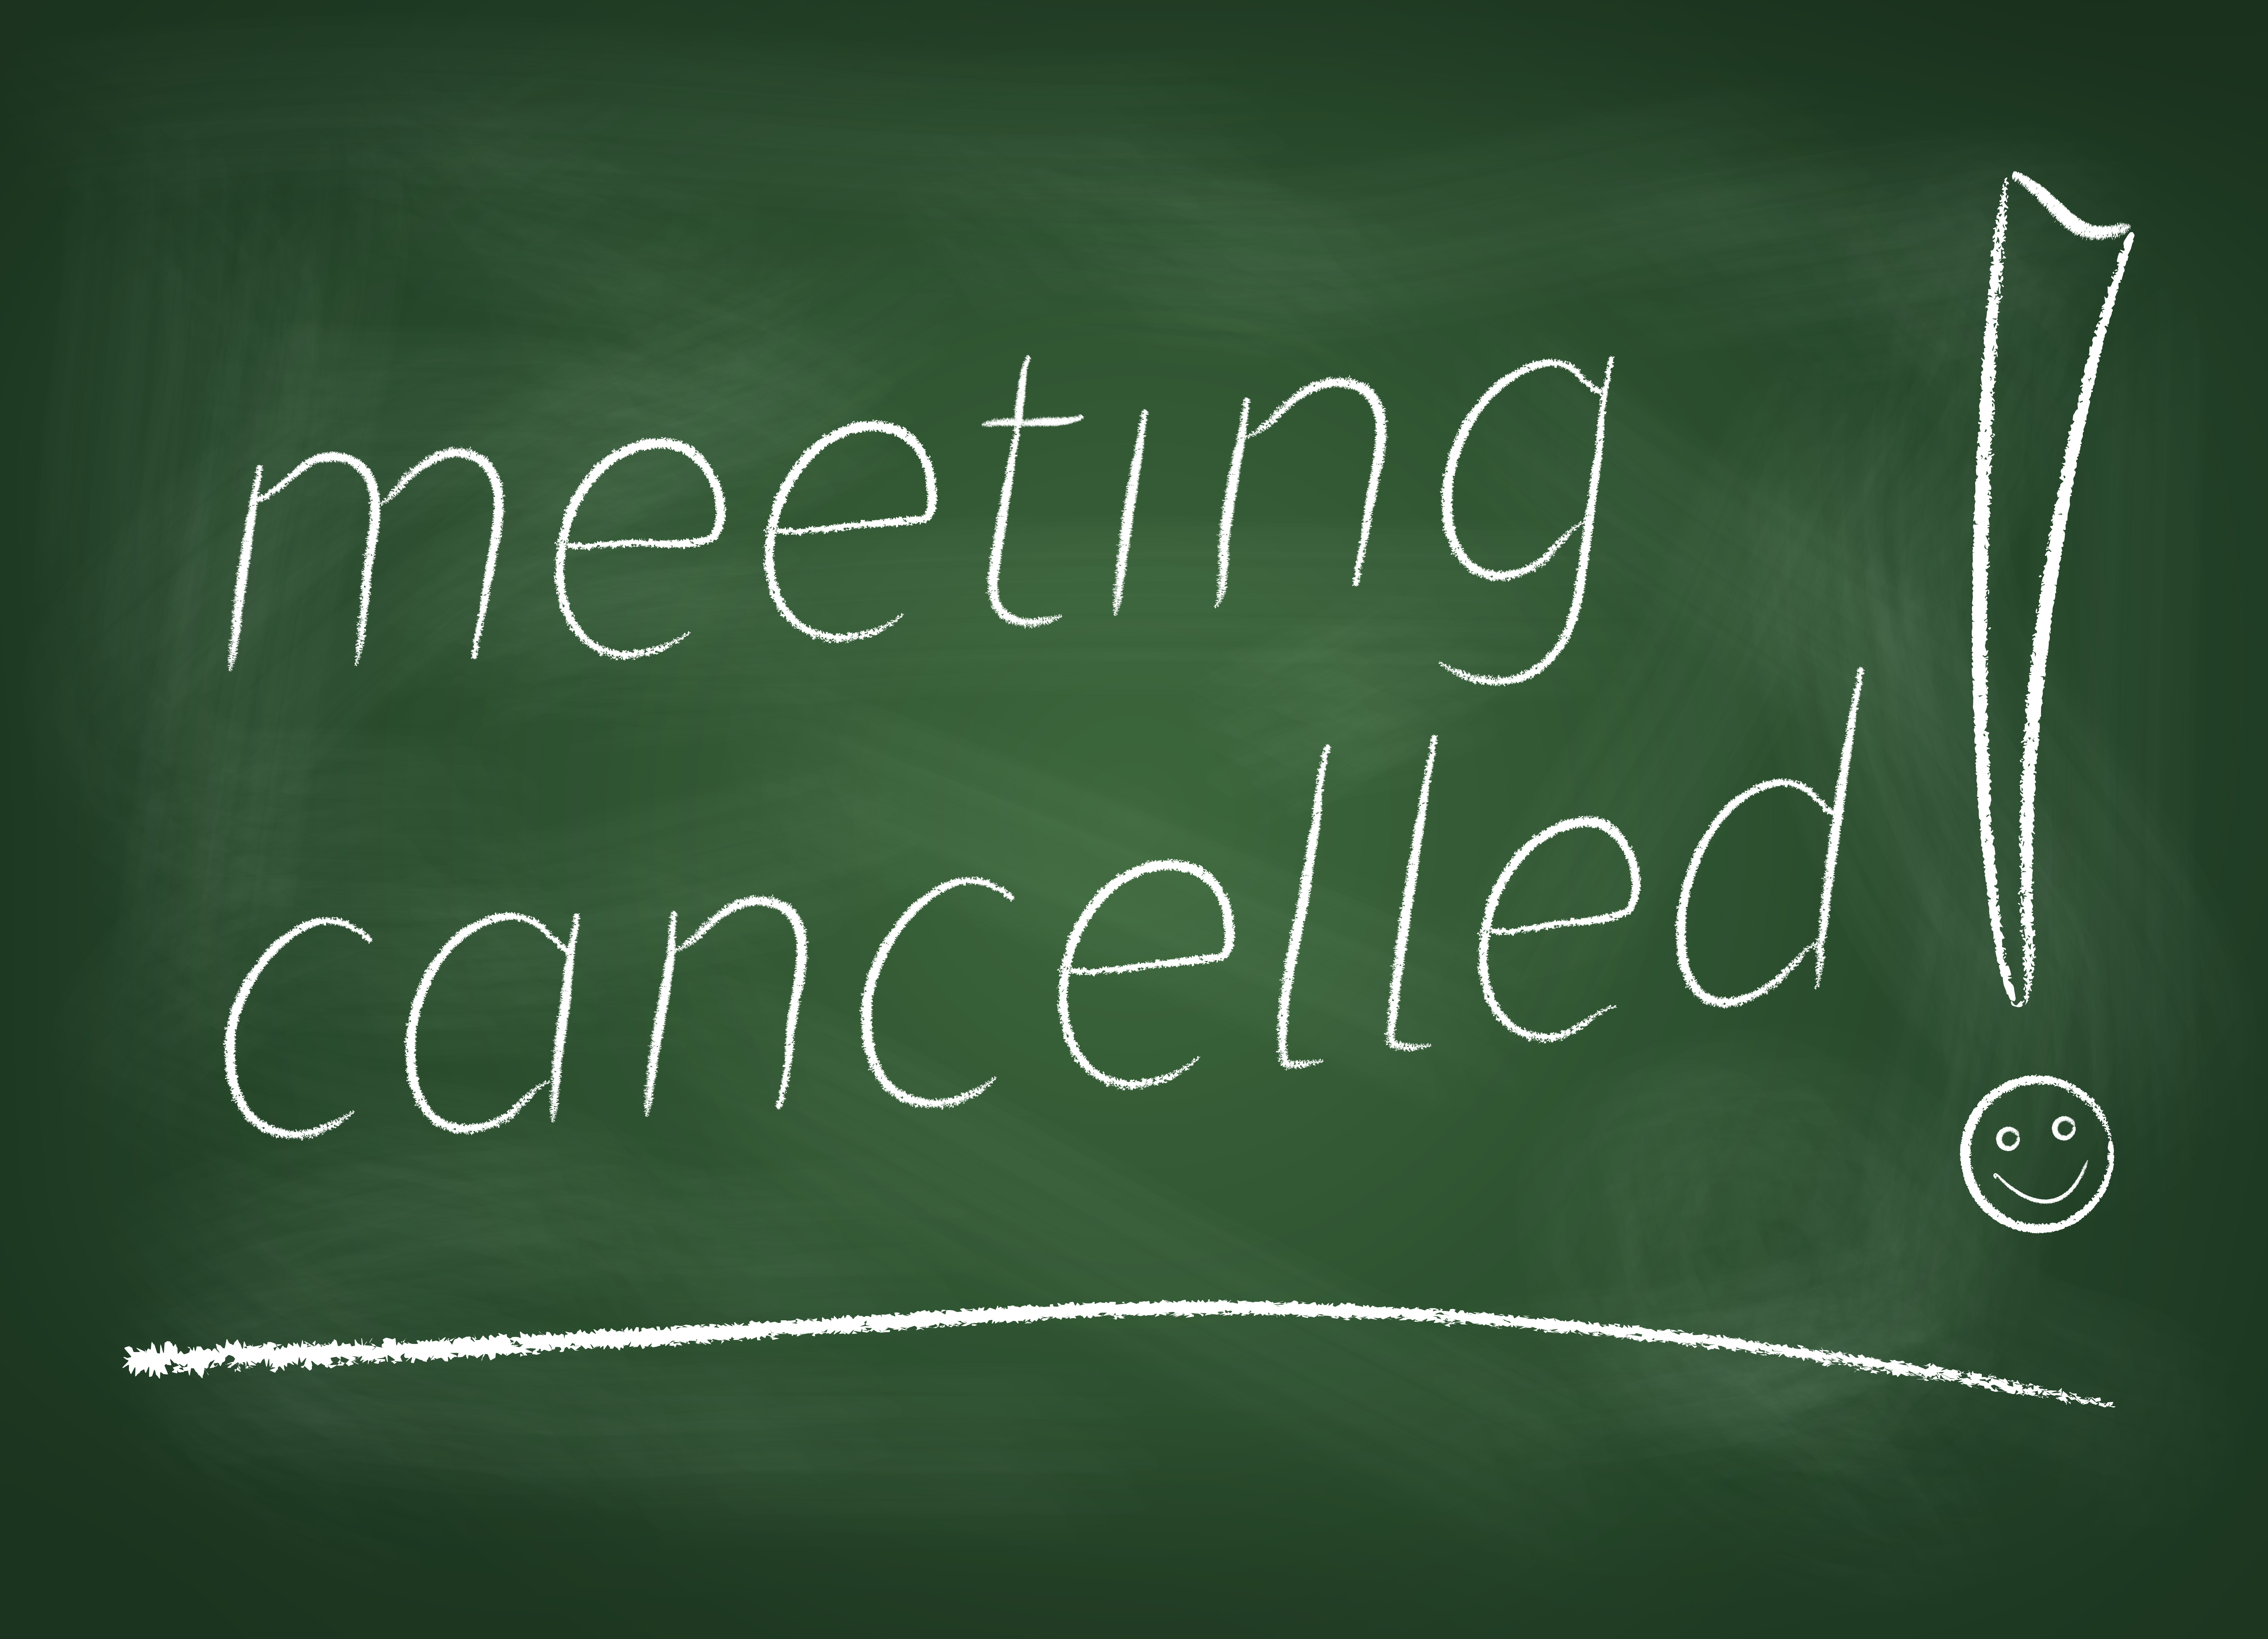 HOA Meeting Cancelled